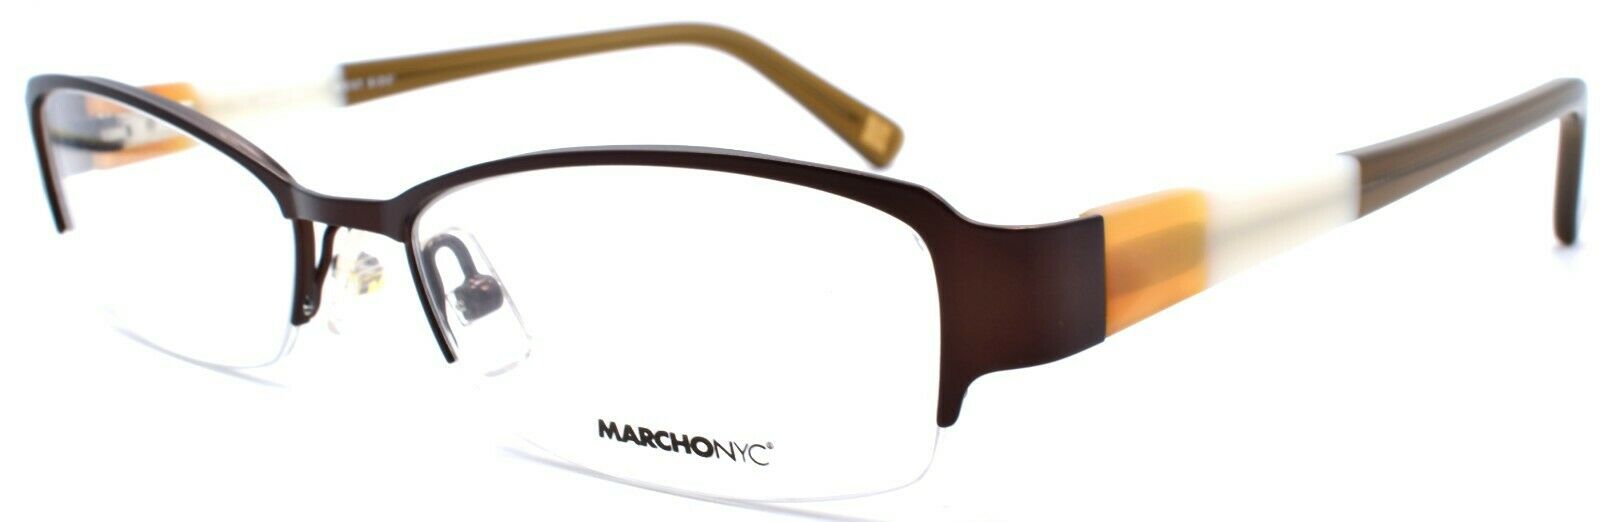 1-Marchon Plaza 210 Women's Eyeglasses Frames Half-rim 50-17-135 Satin Brown-883121938717-IKSpecs